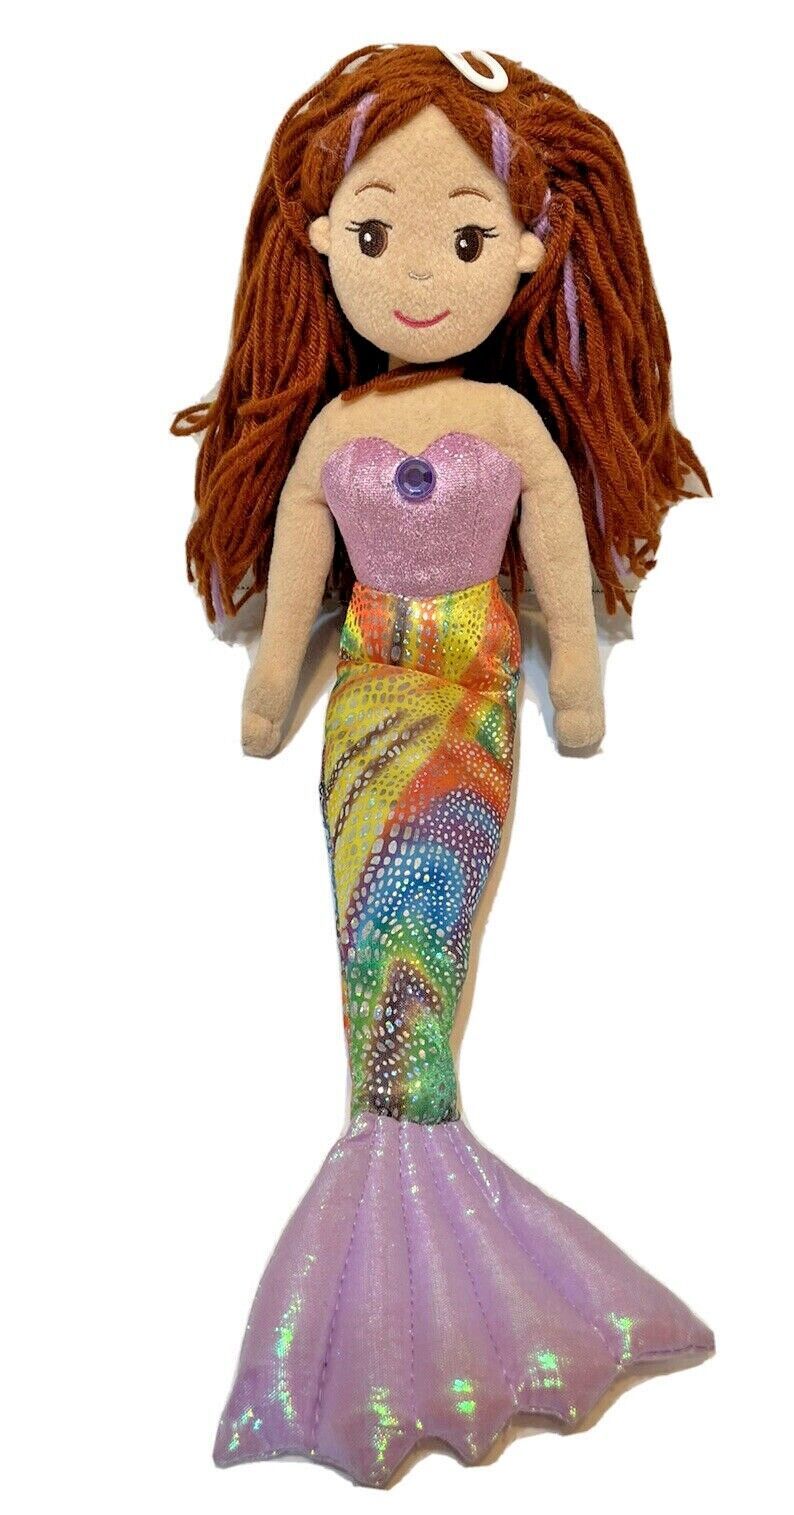 Primary image for Aurora Mermaid Sea Sparkles Plush Doll 18" Stuffed Toy Tie Dye Tail Brown Hair